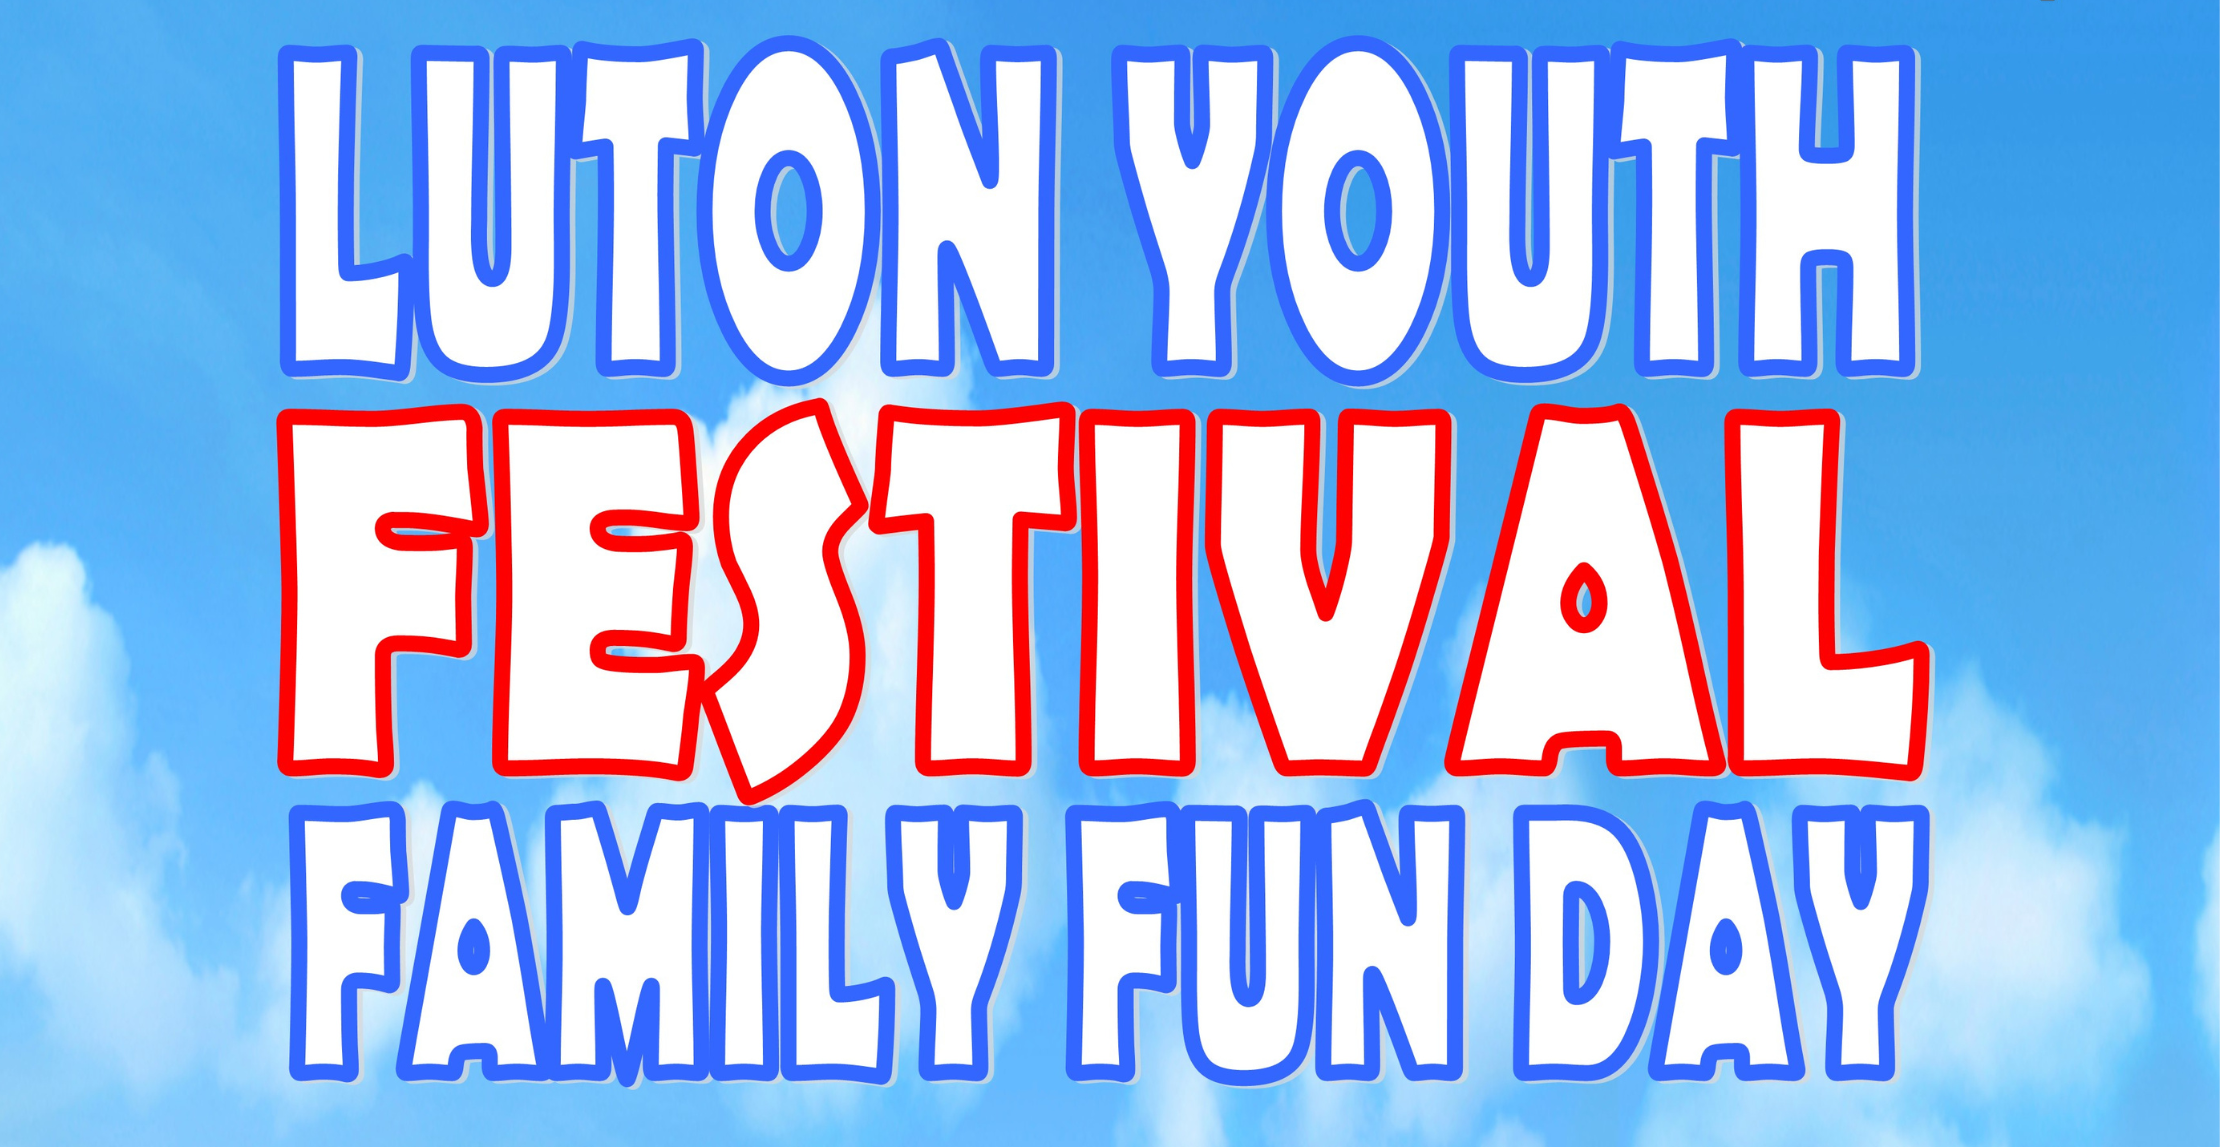 luton youth festival family fun day